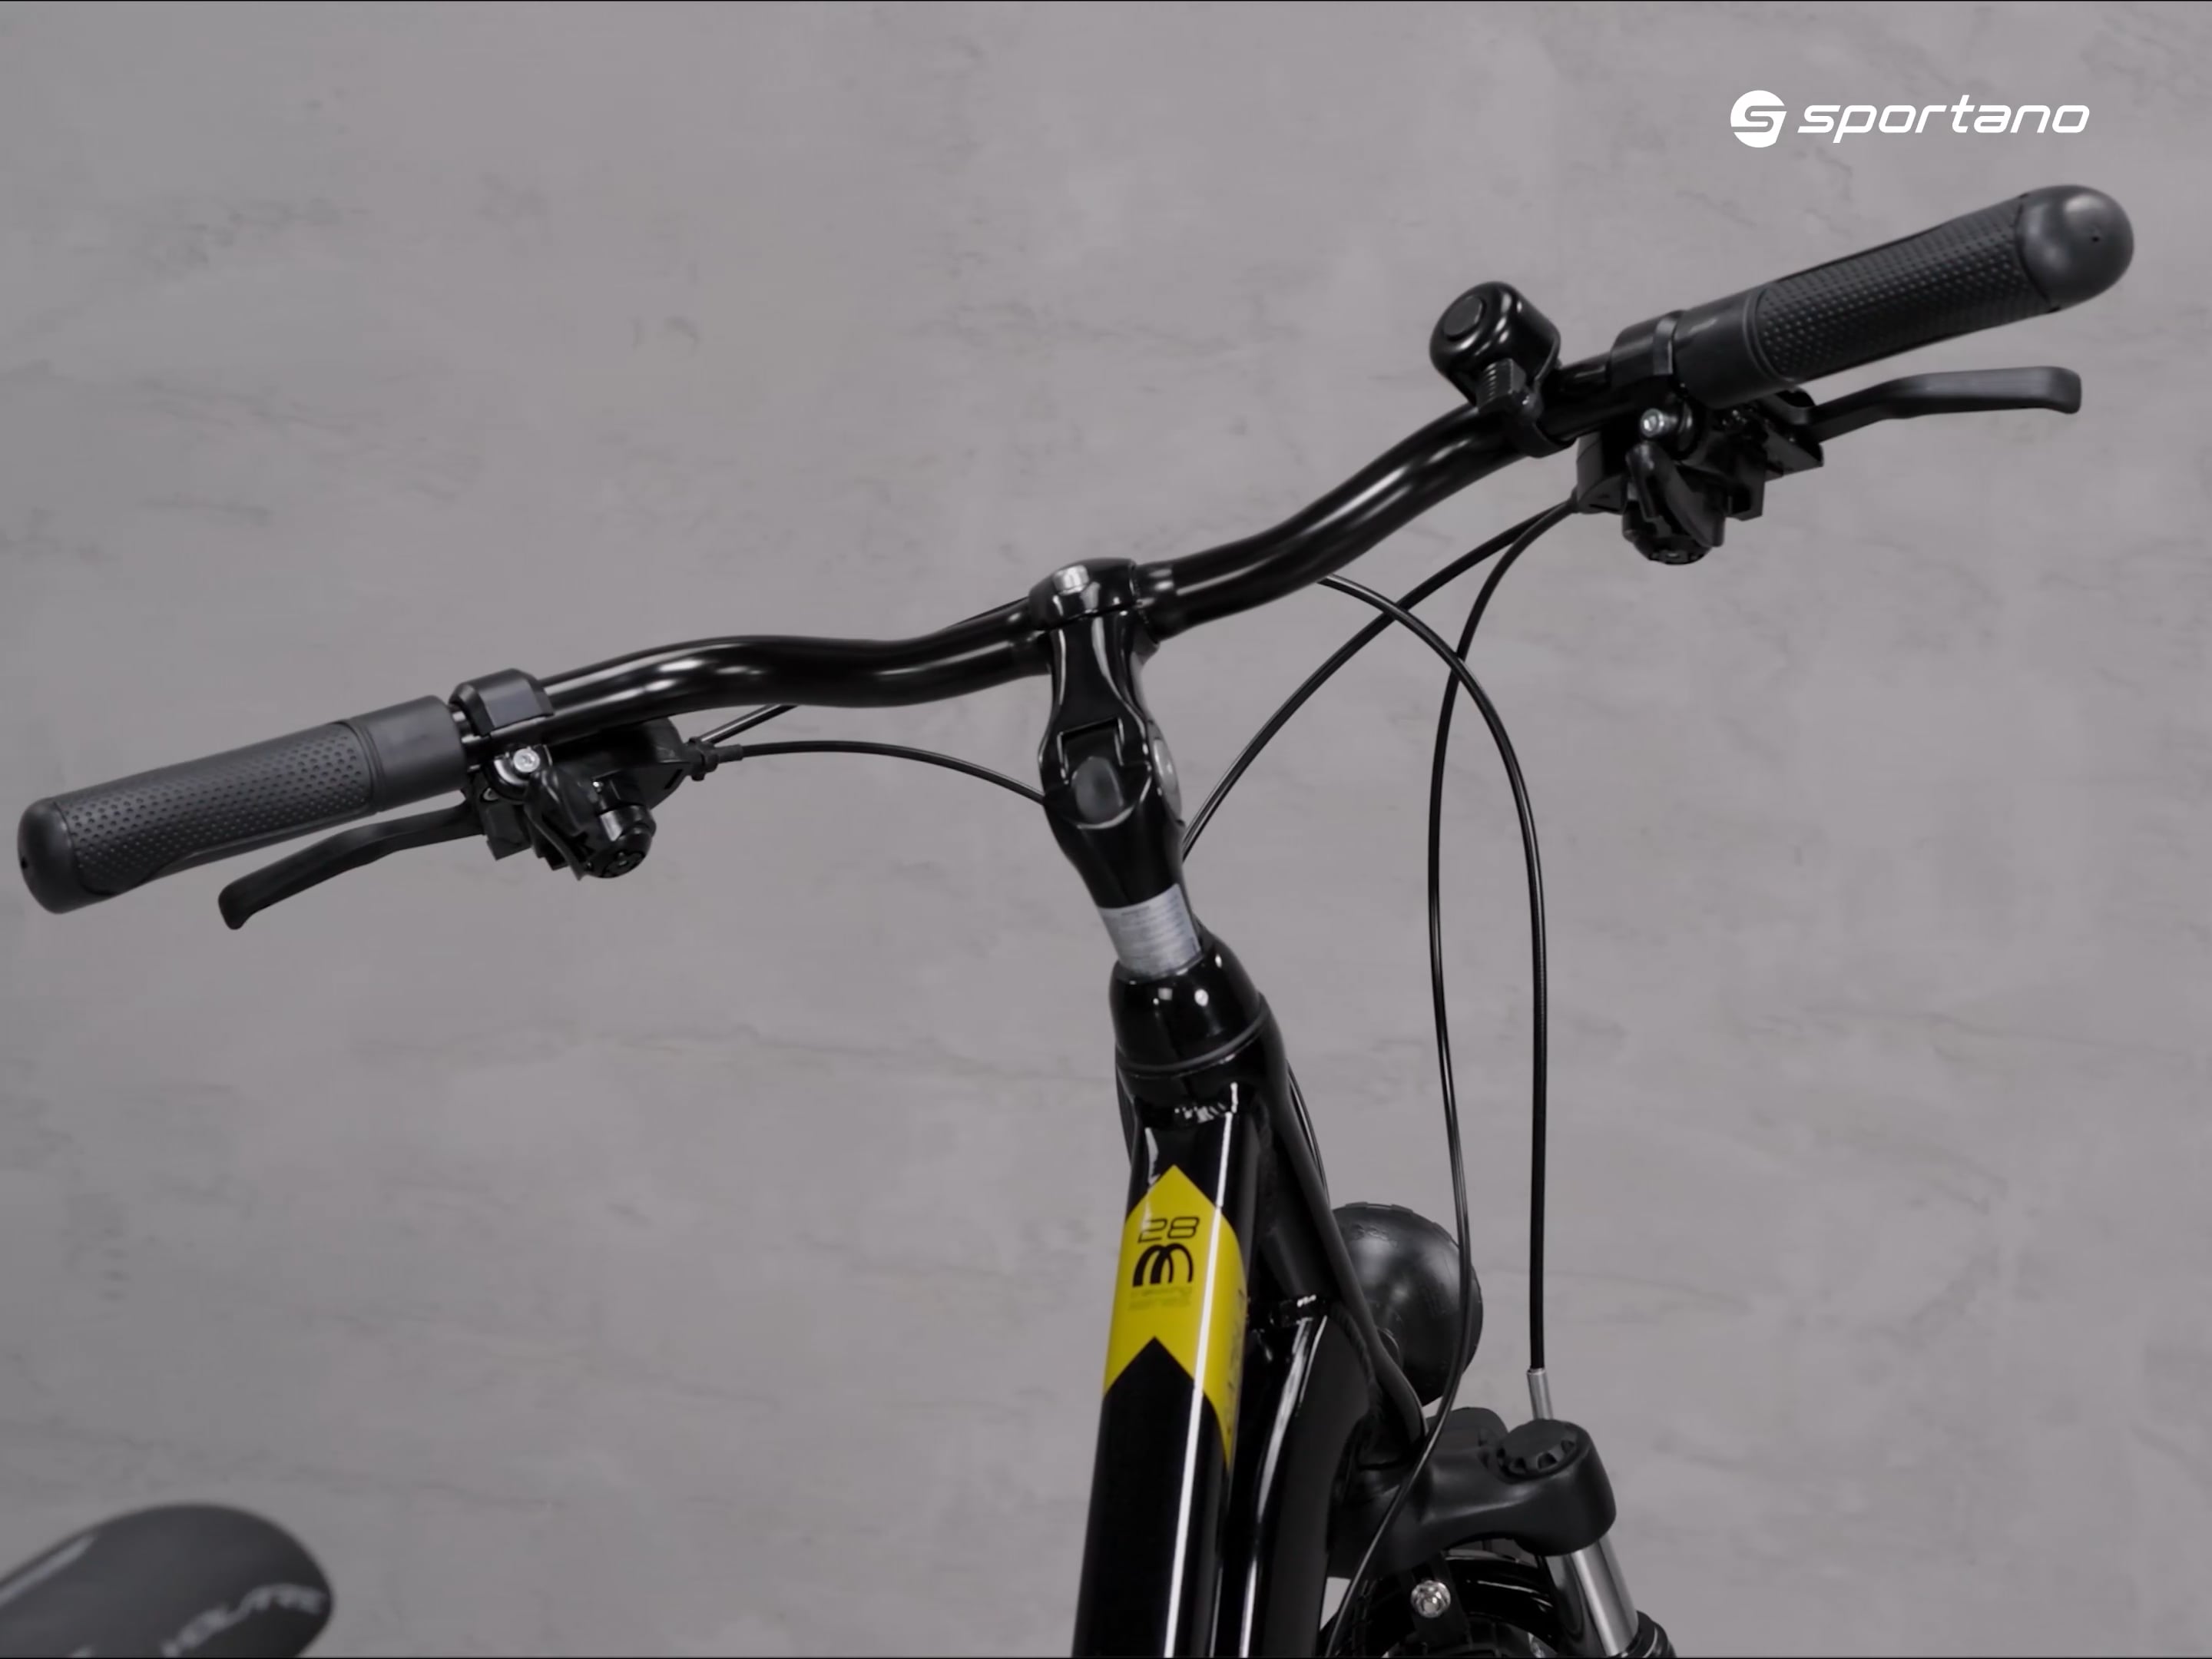 Moteriškas trekingas dviratis Romet Gazela juoda/geltona R22A-TRE-28-19-P-468